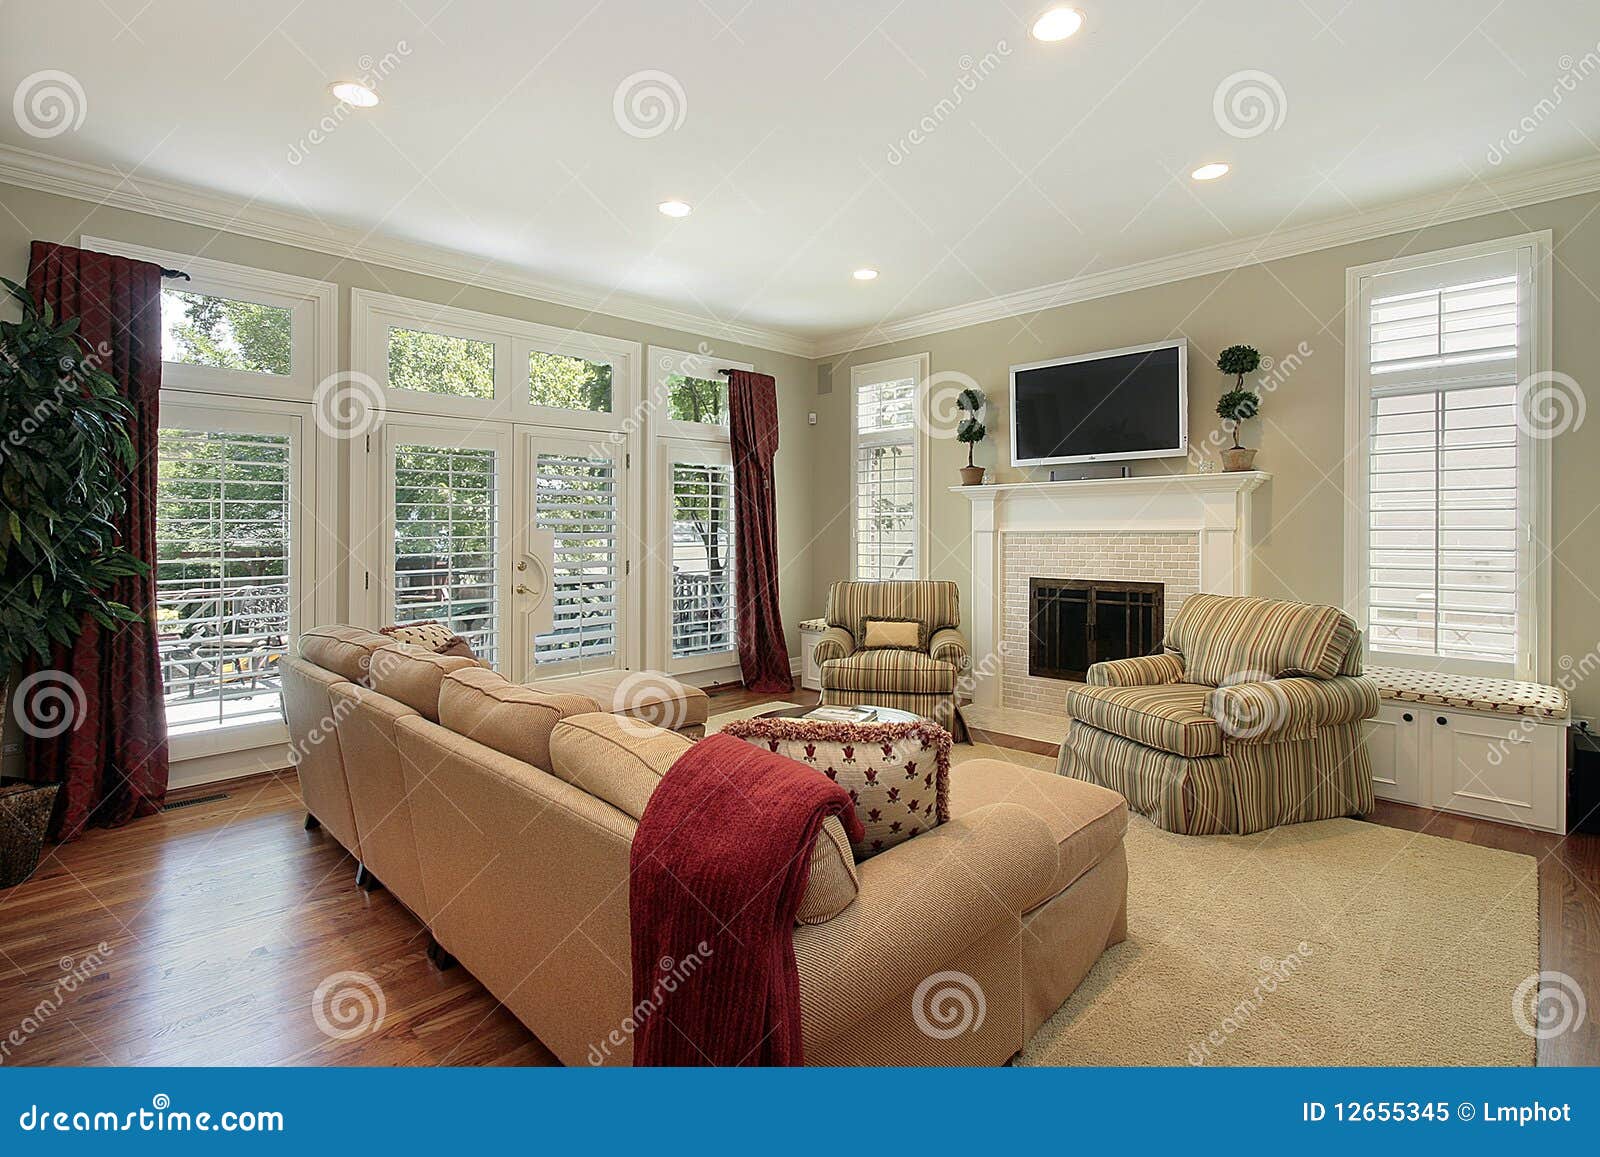 Family Room with Brick Fireplace Stock Image - Image of upscale, luxury ...